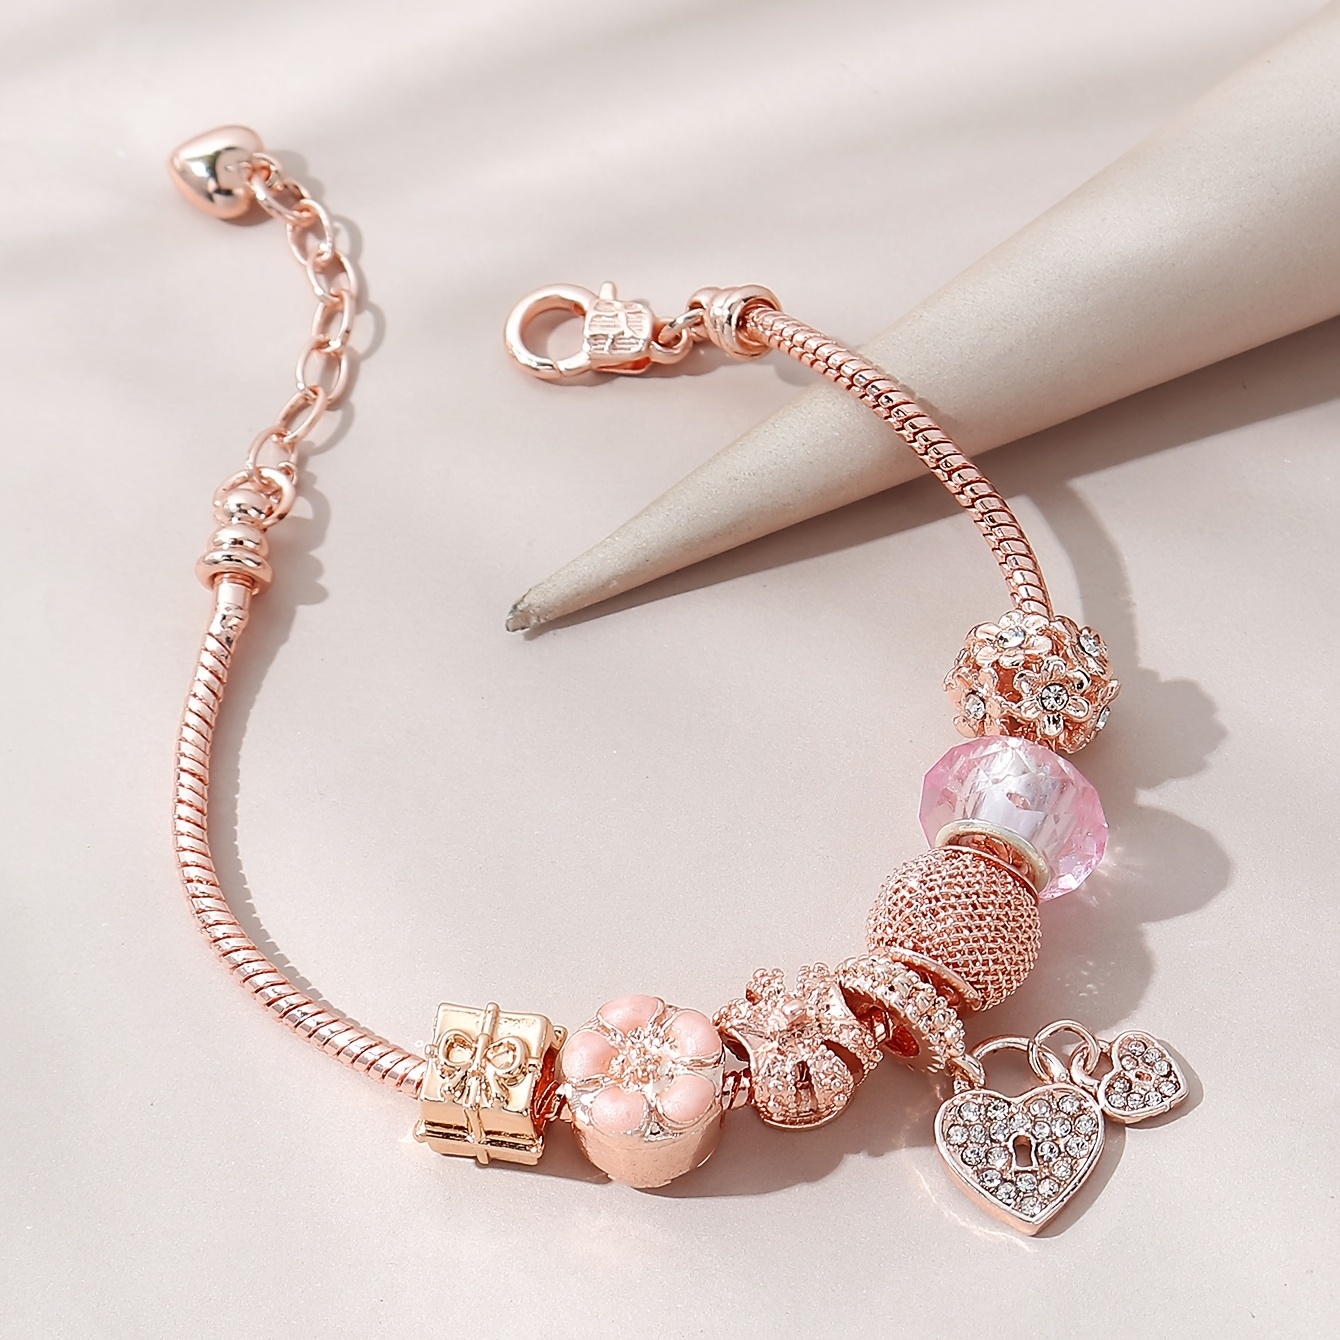 60+ Amazing DIY Bracelet Ideas For Classy Ladies